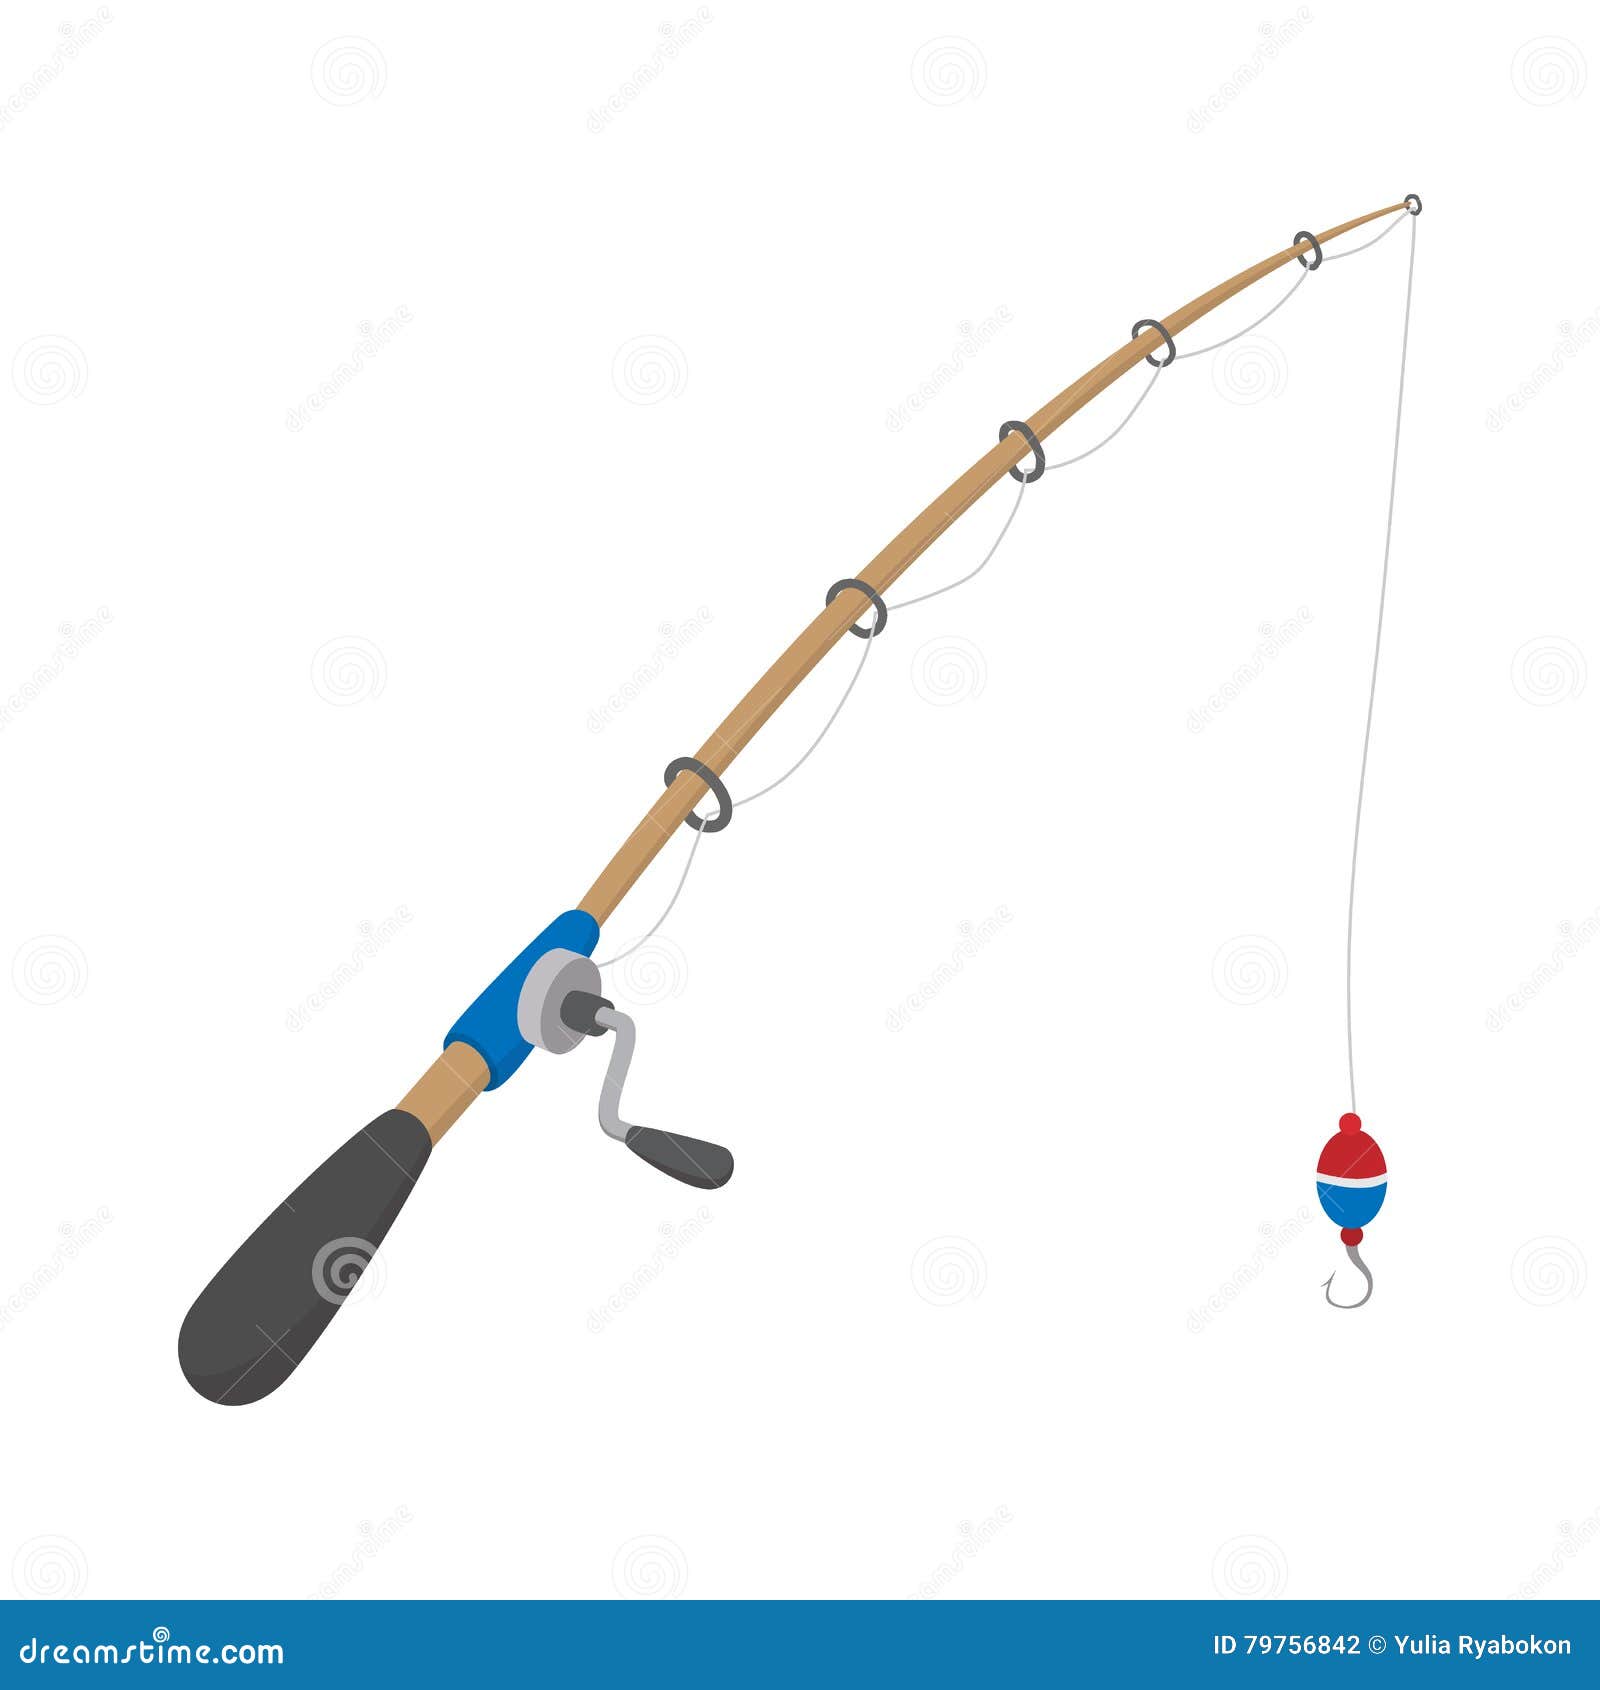 https://thumbs.dreamstime.com/z/fishing-rod-cartoon-icon-backpacker-equipment-single-symbol-white-white-79756842.jpg